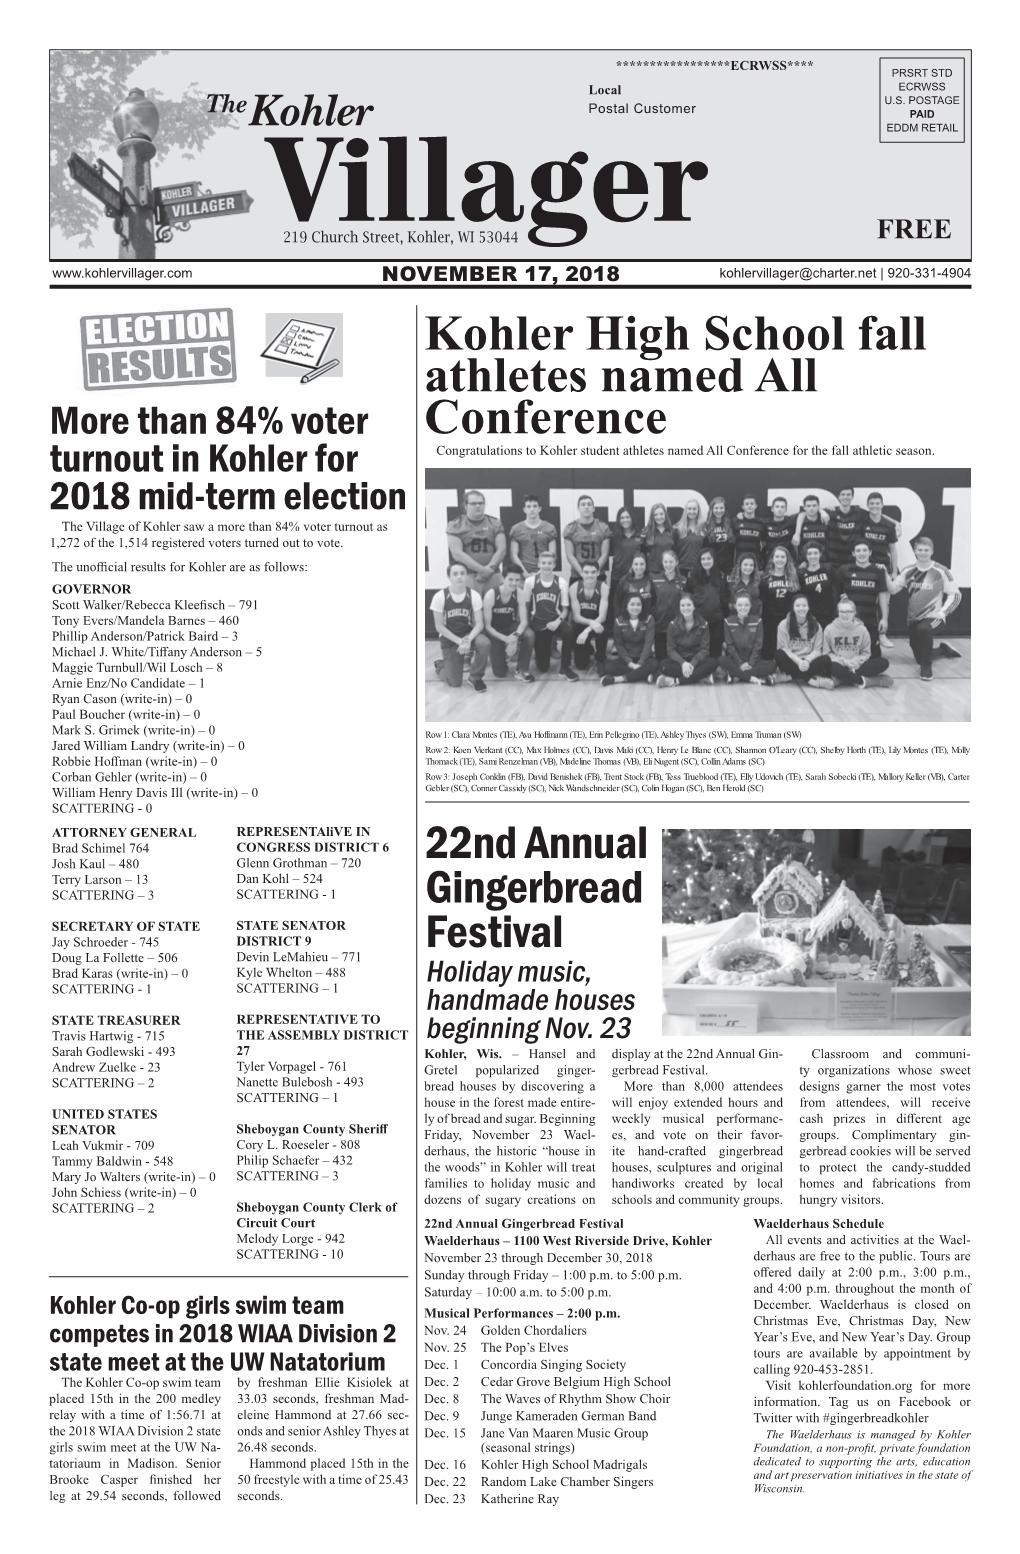 Kohler High School Fall Athletes Named All Conference